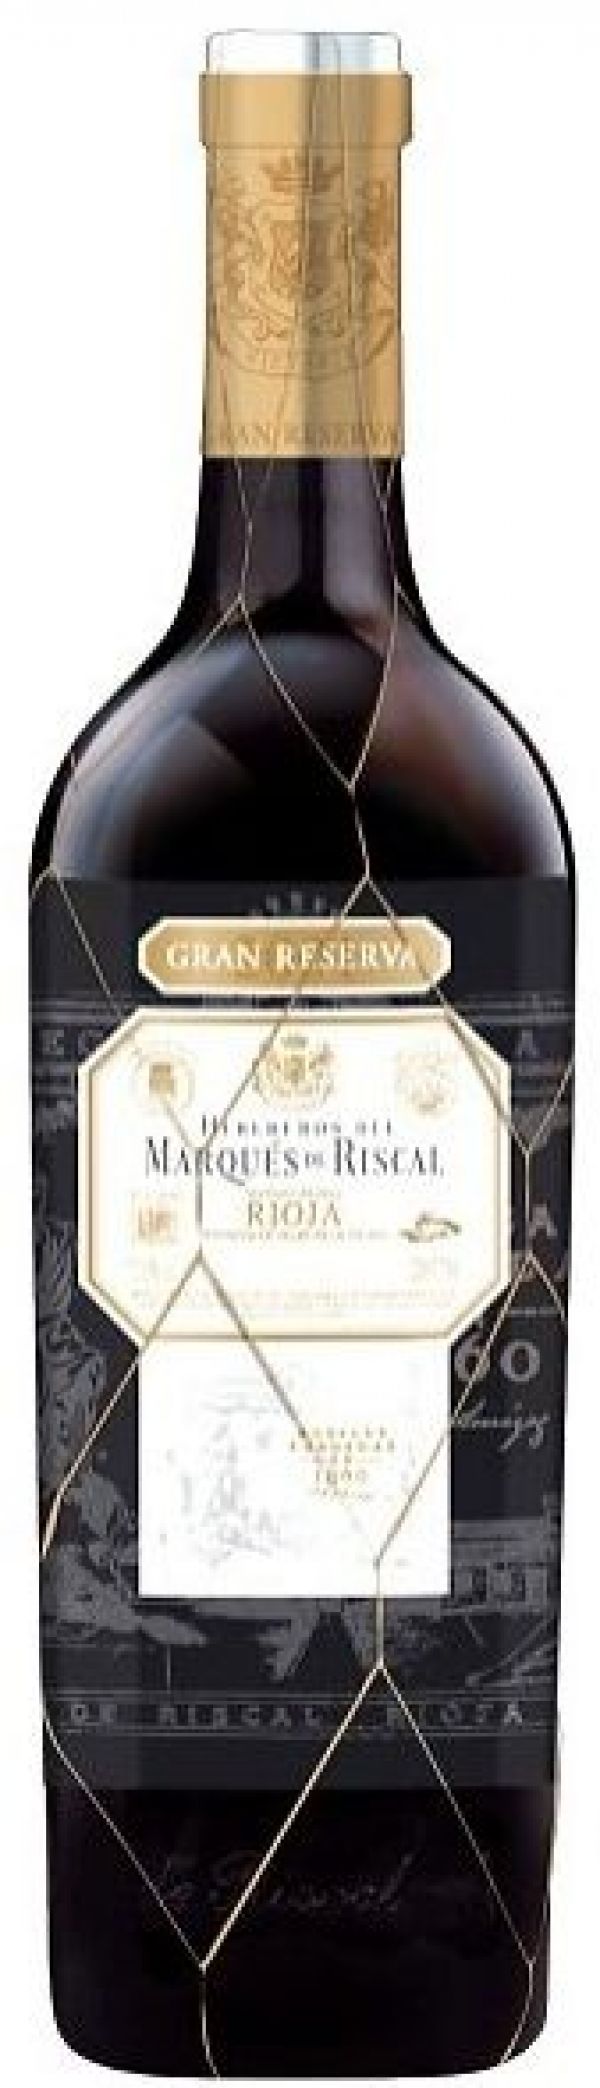 Rioja Gran Reserva 2005